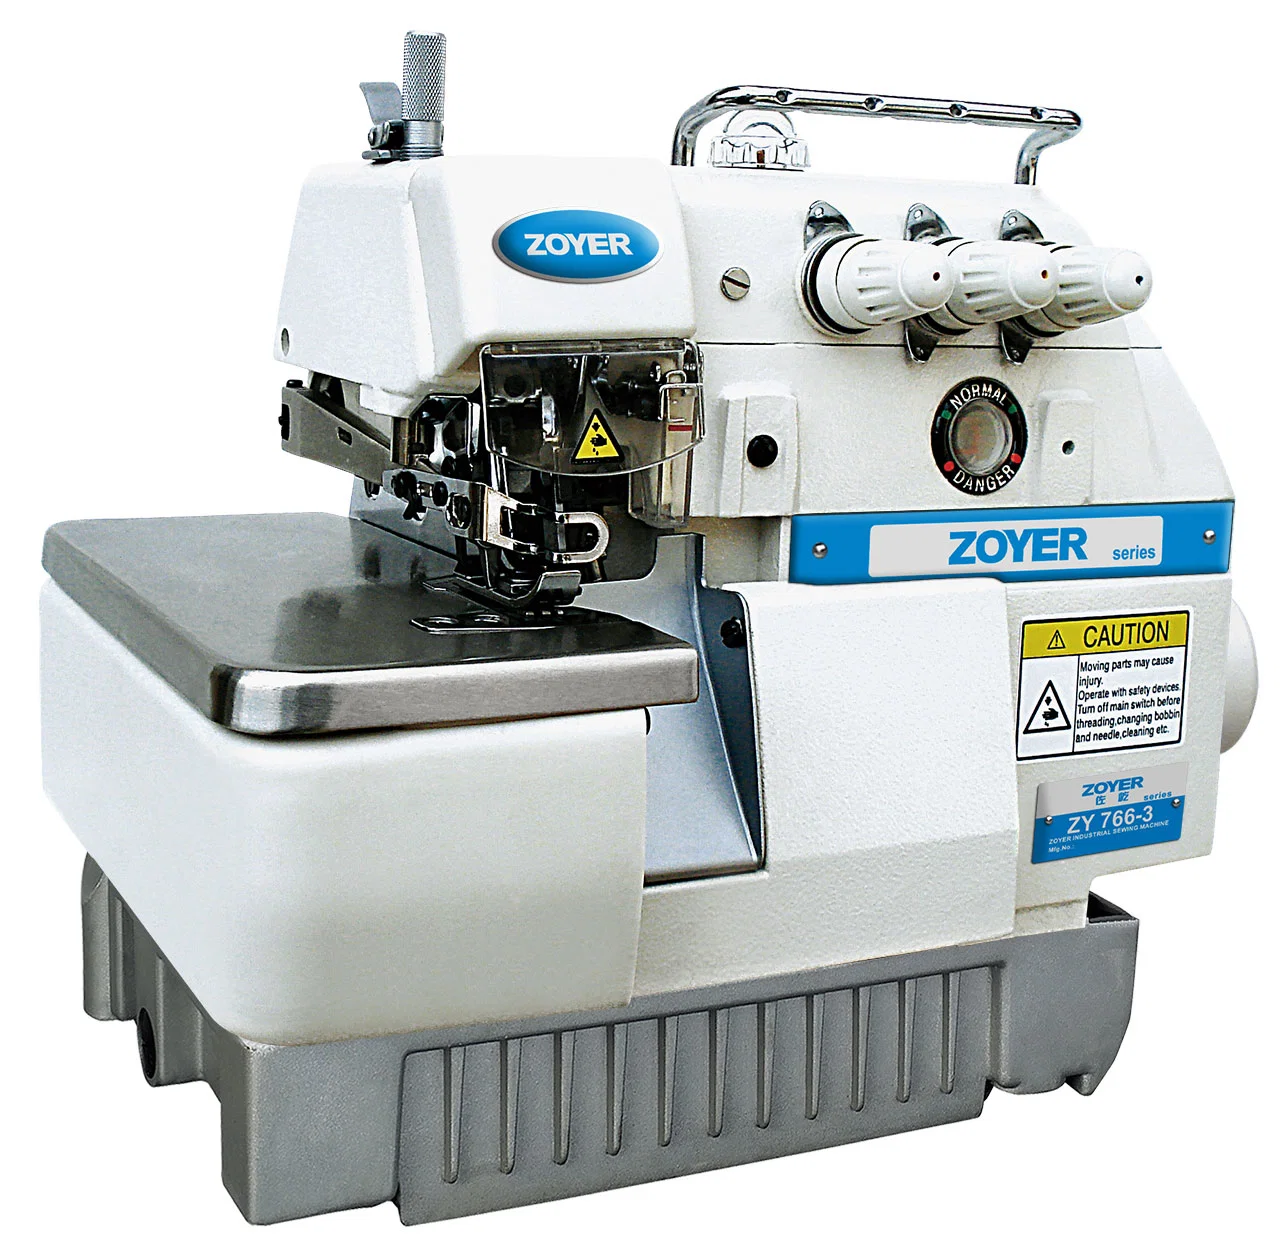 Zy766-3 Zoyer 3-Thread Super High Speed Overlock Industrial Sewing Machine for Garment